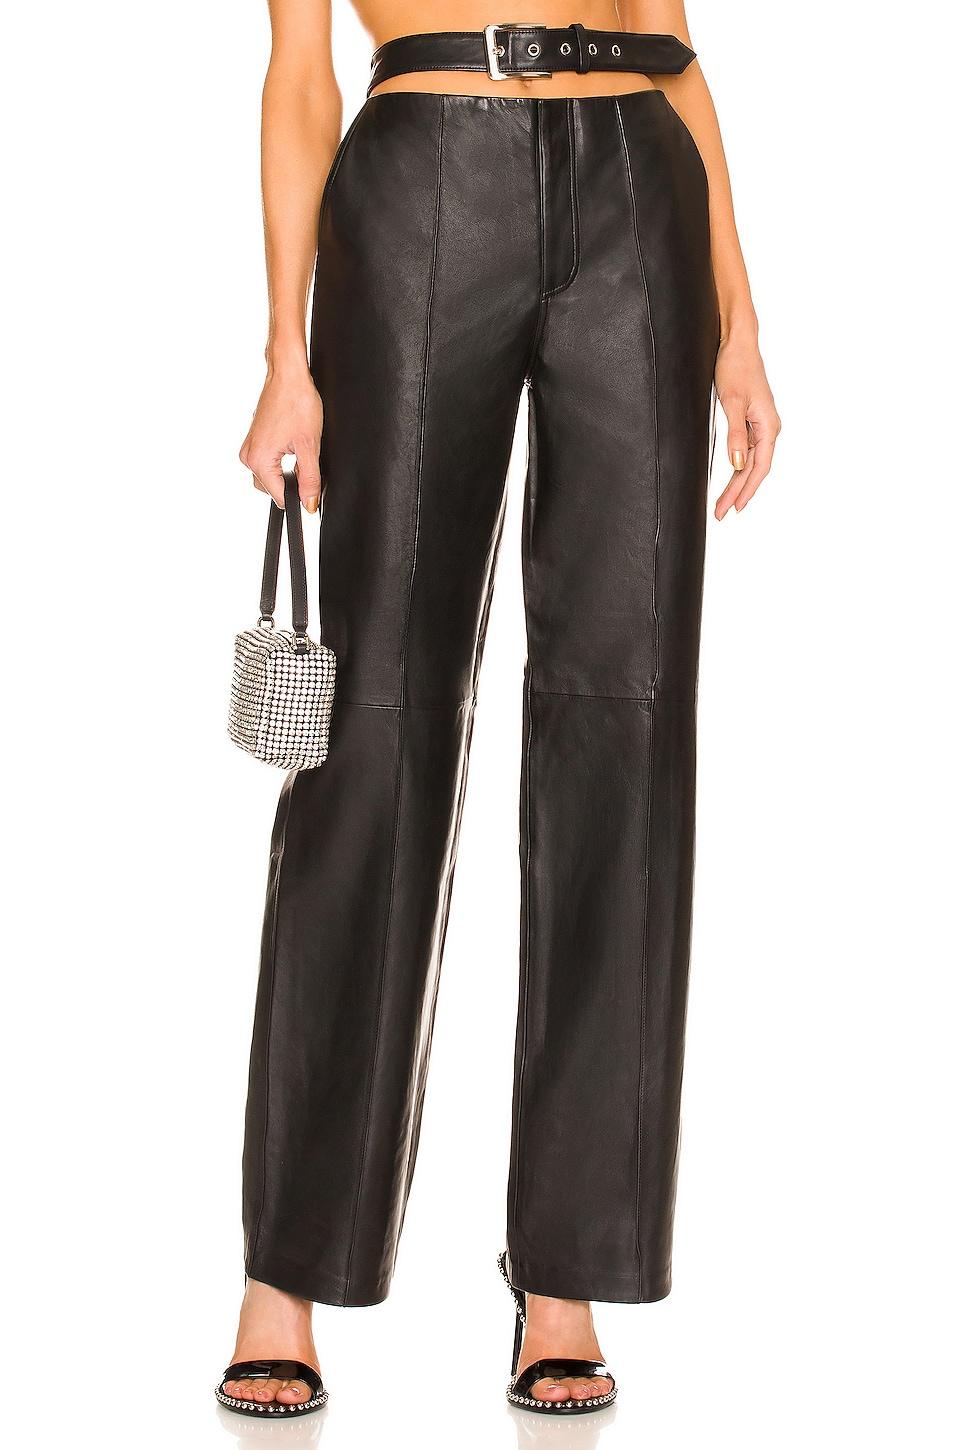 Nbd Linda Leather Pant in Black | Lyst